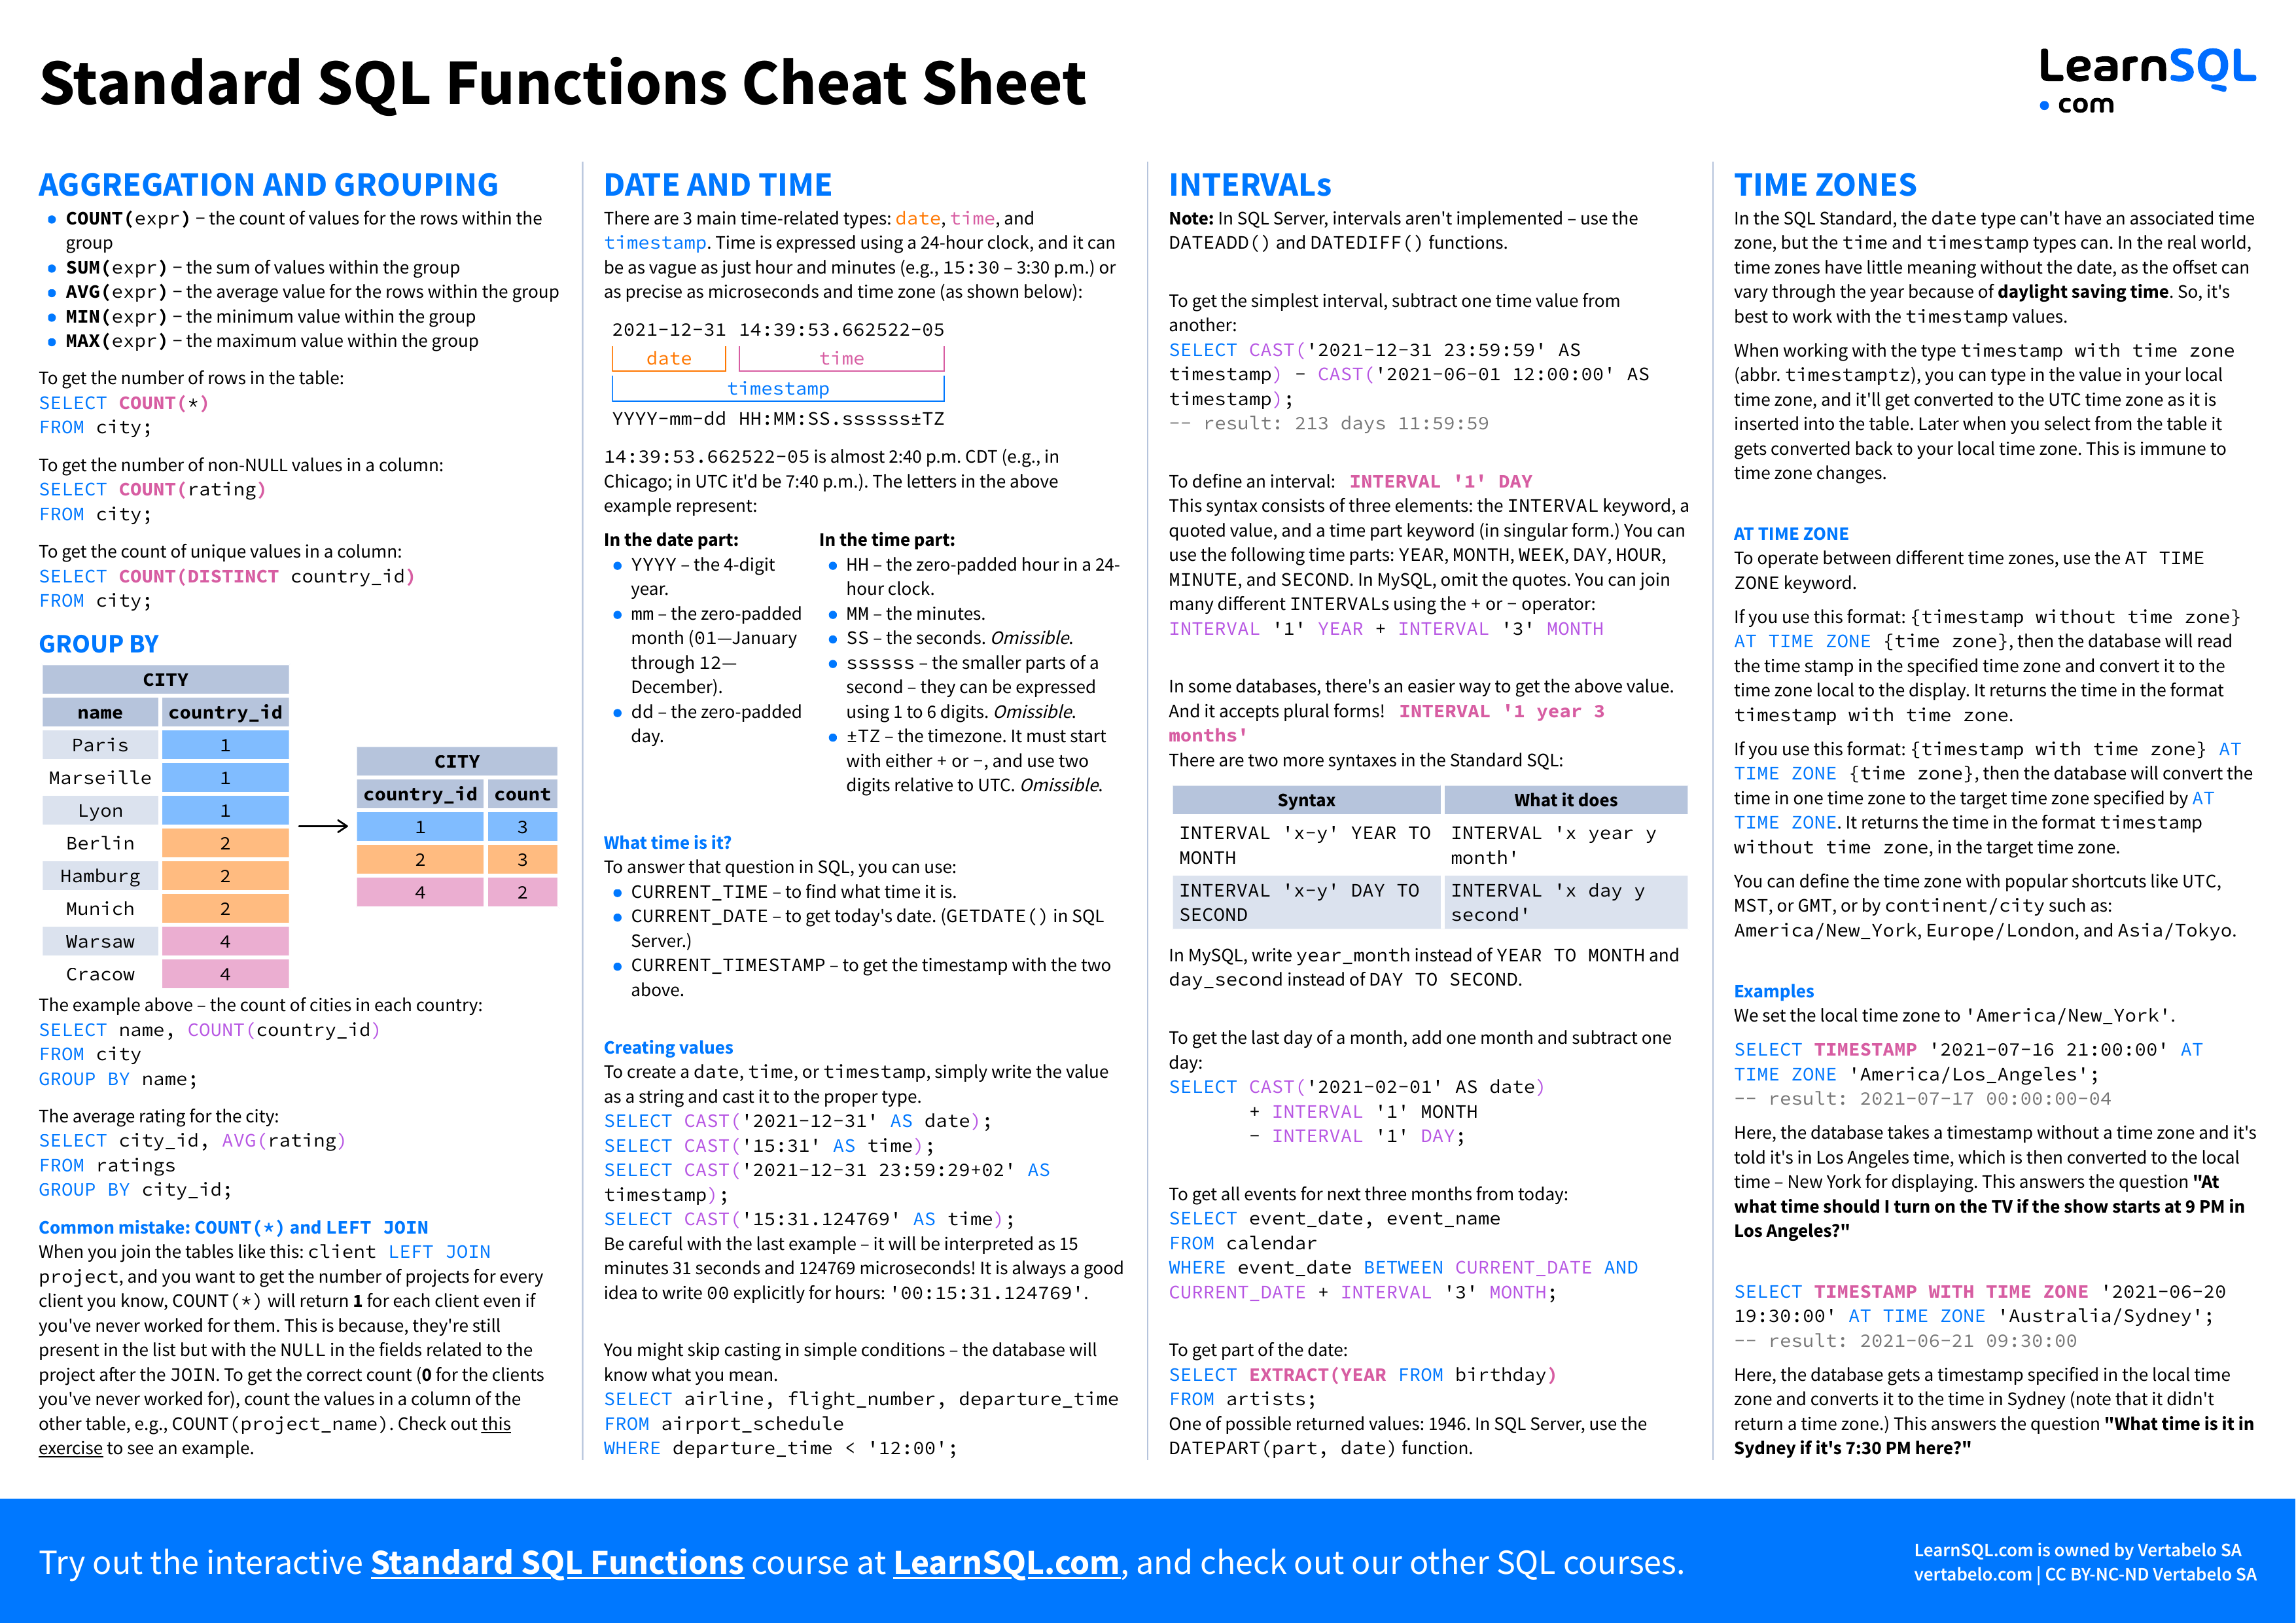 Standard SQL Functions Cheat Sheet | LearnSQL.com